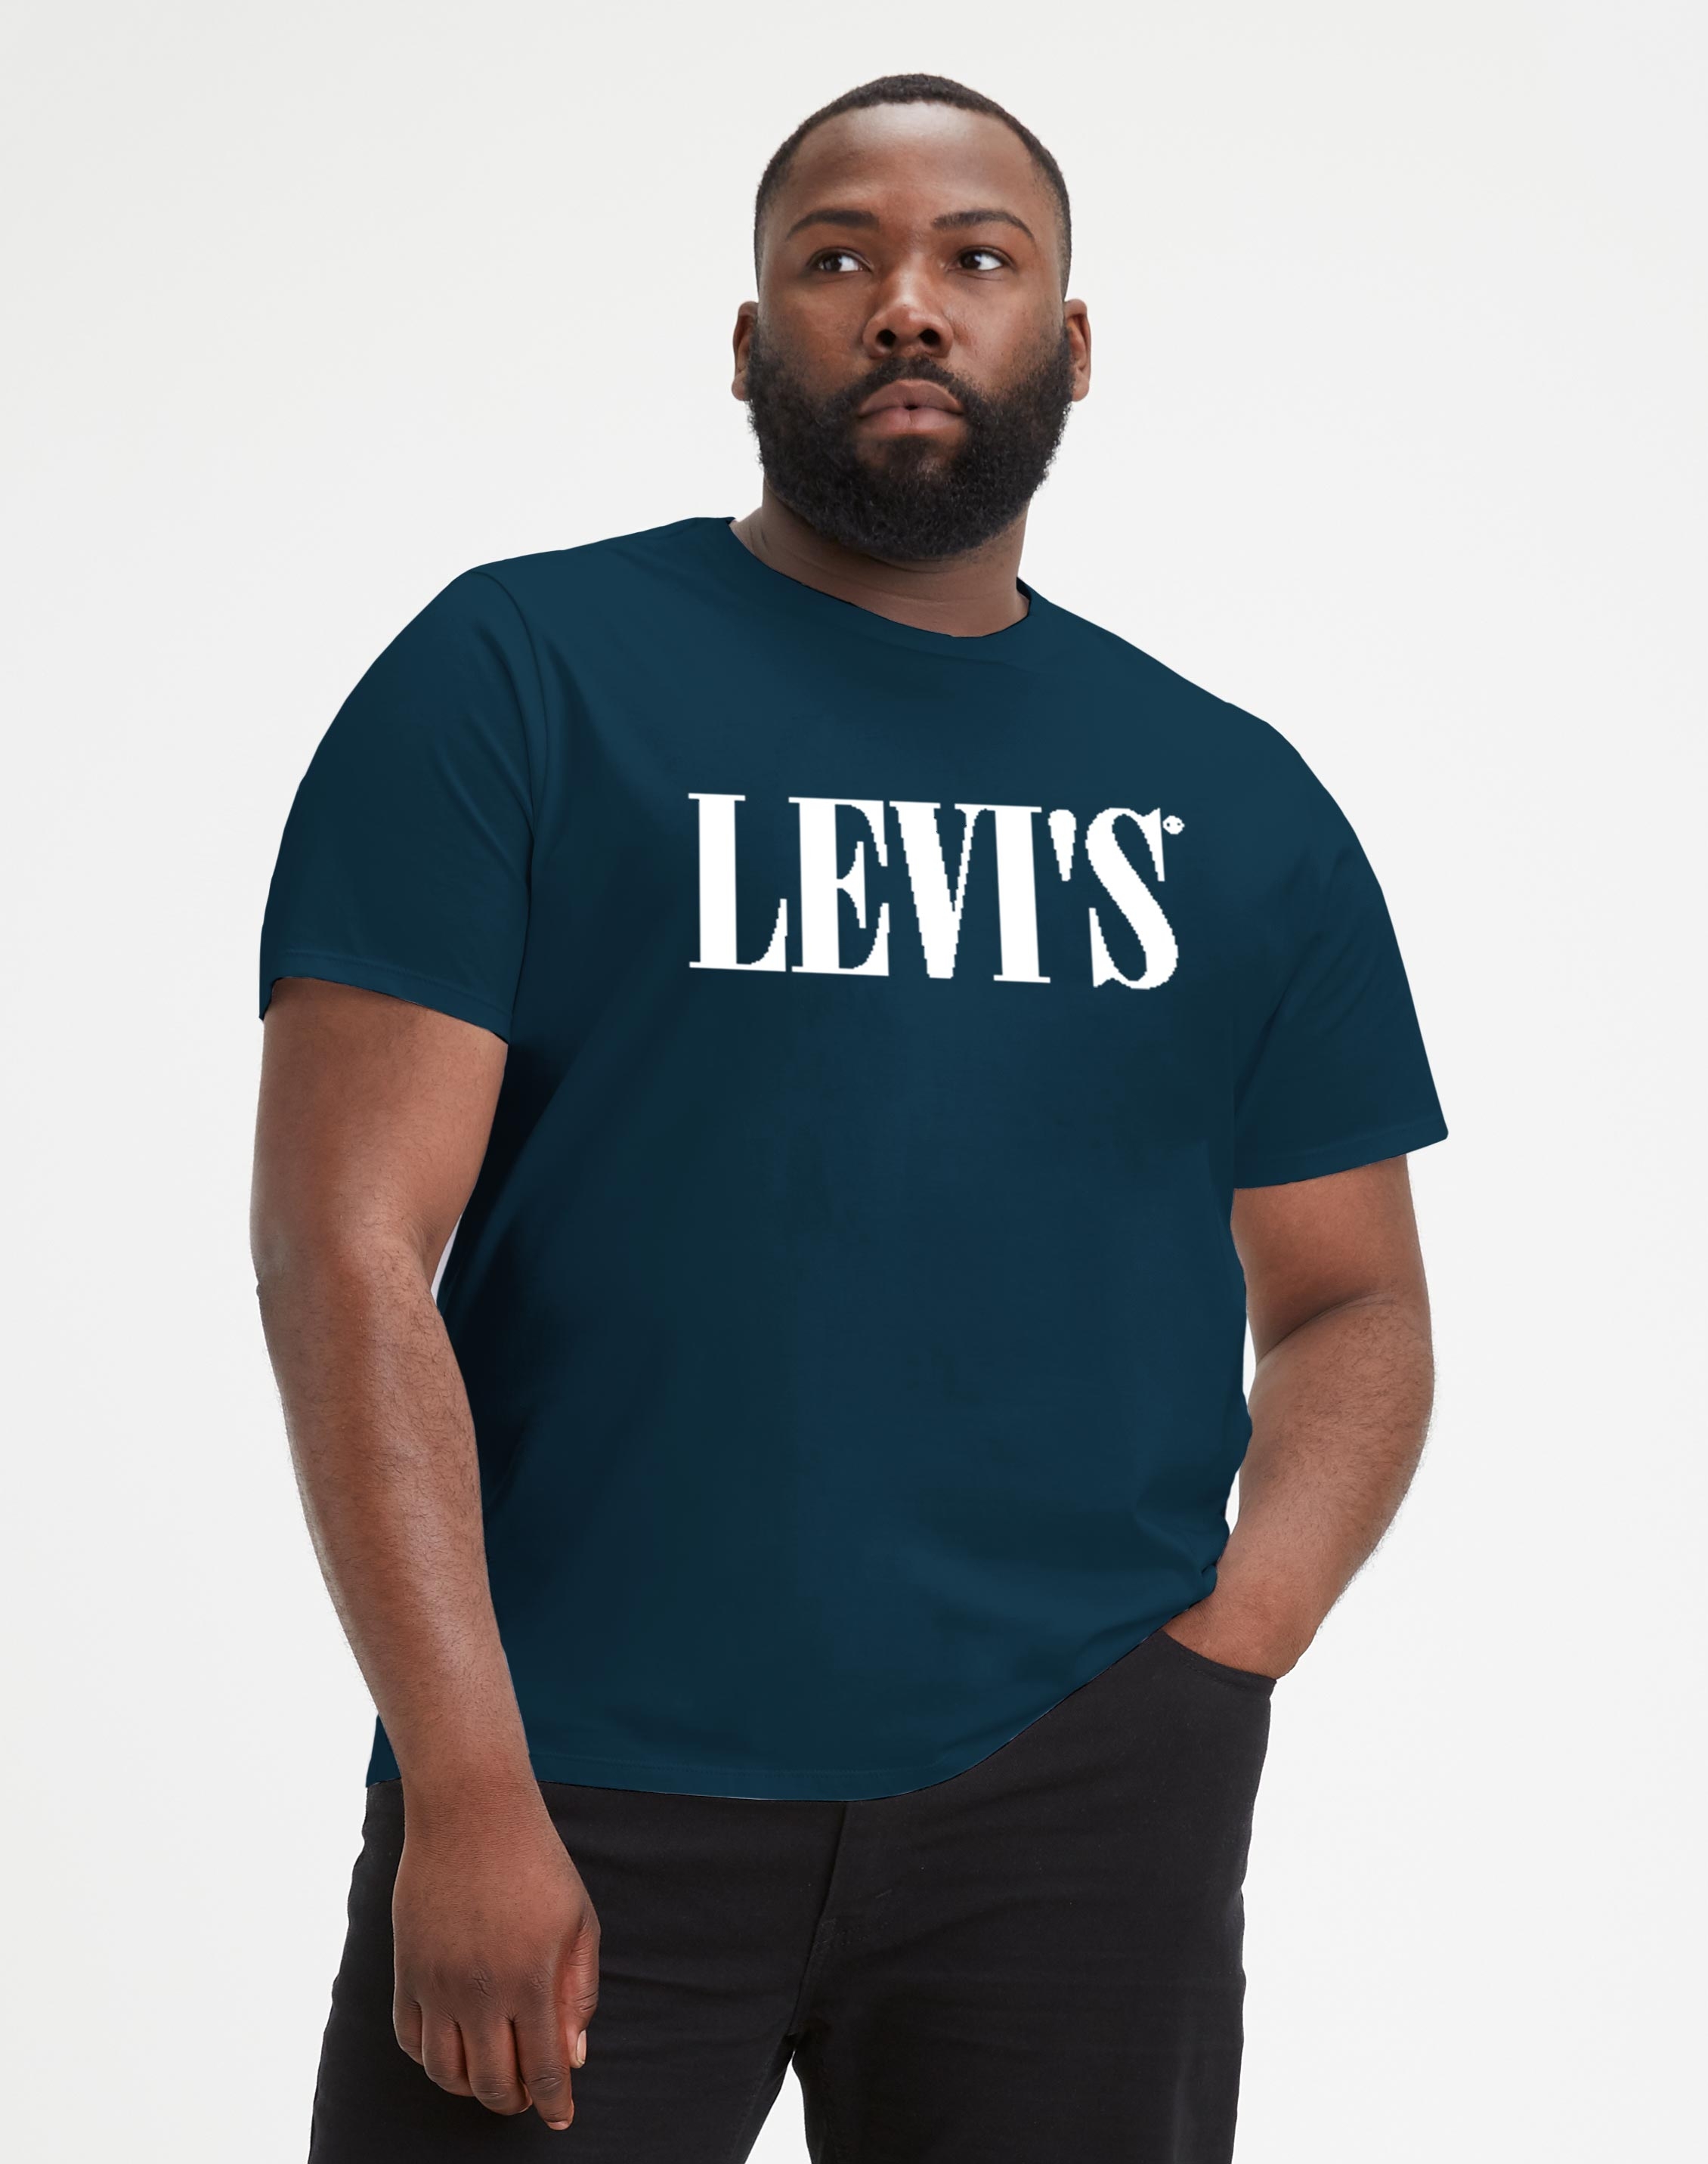 Levi's samarreta d'home 56760-0014 blau marí - talles extra